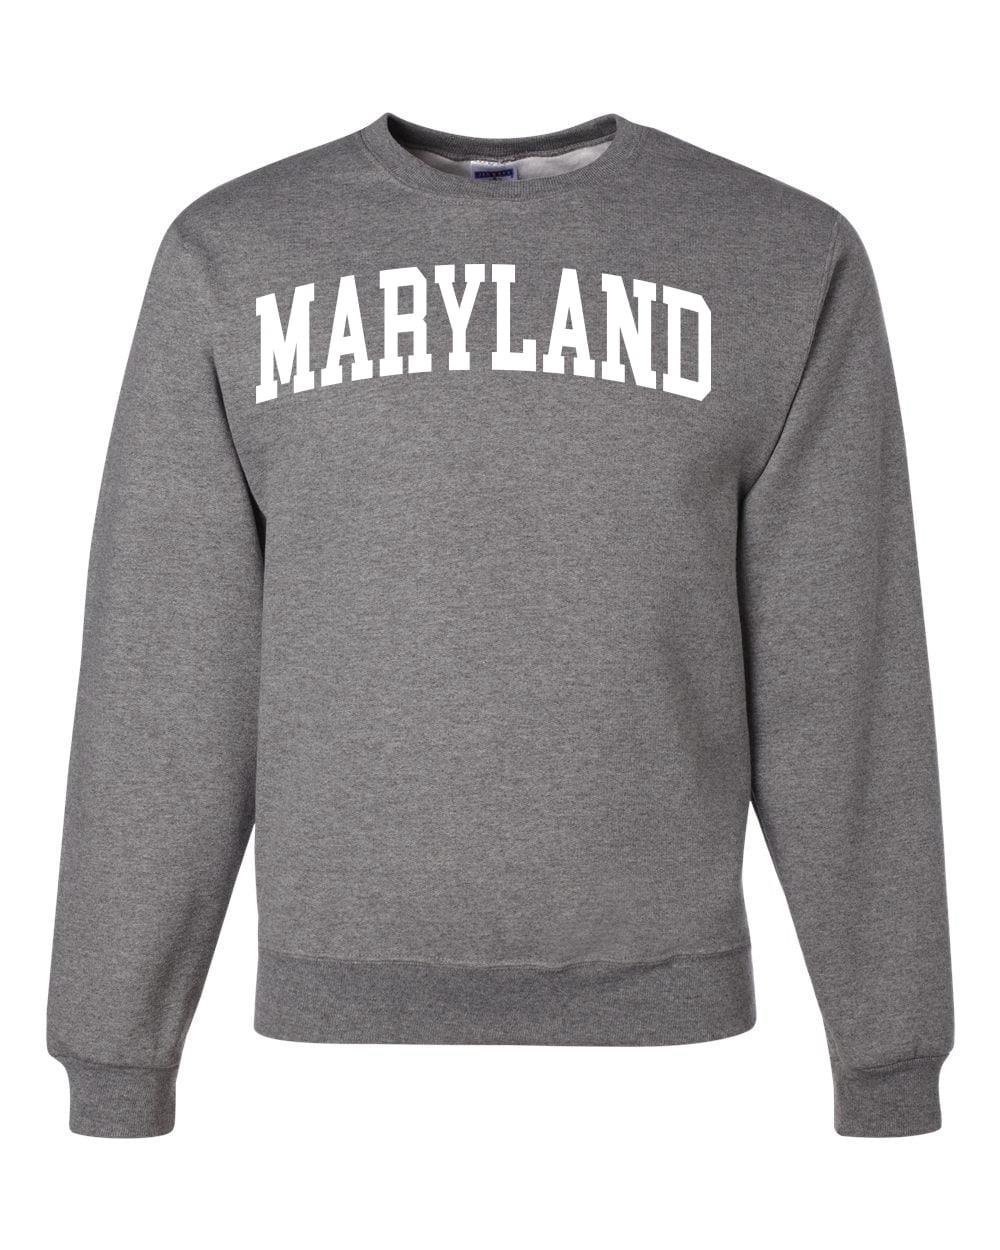 Wild Bobby State of Maryland College Style Unisex Crewneck Sweatshirt ...